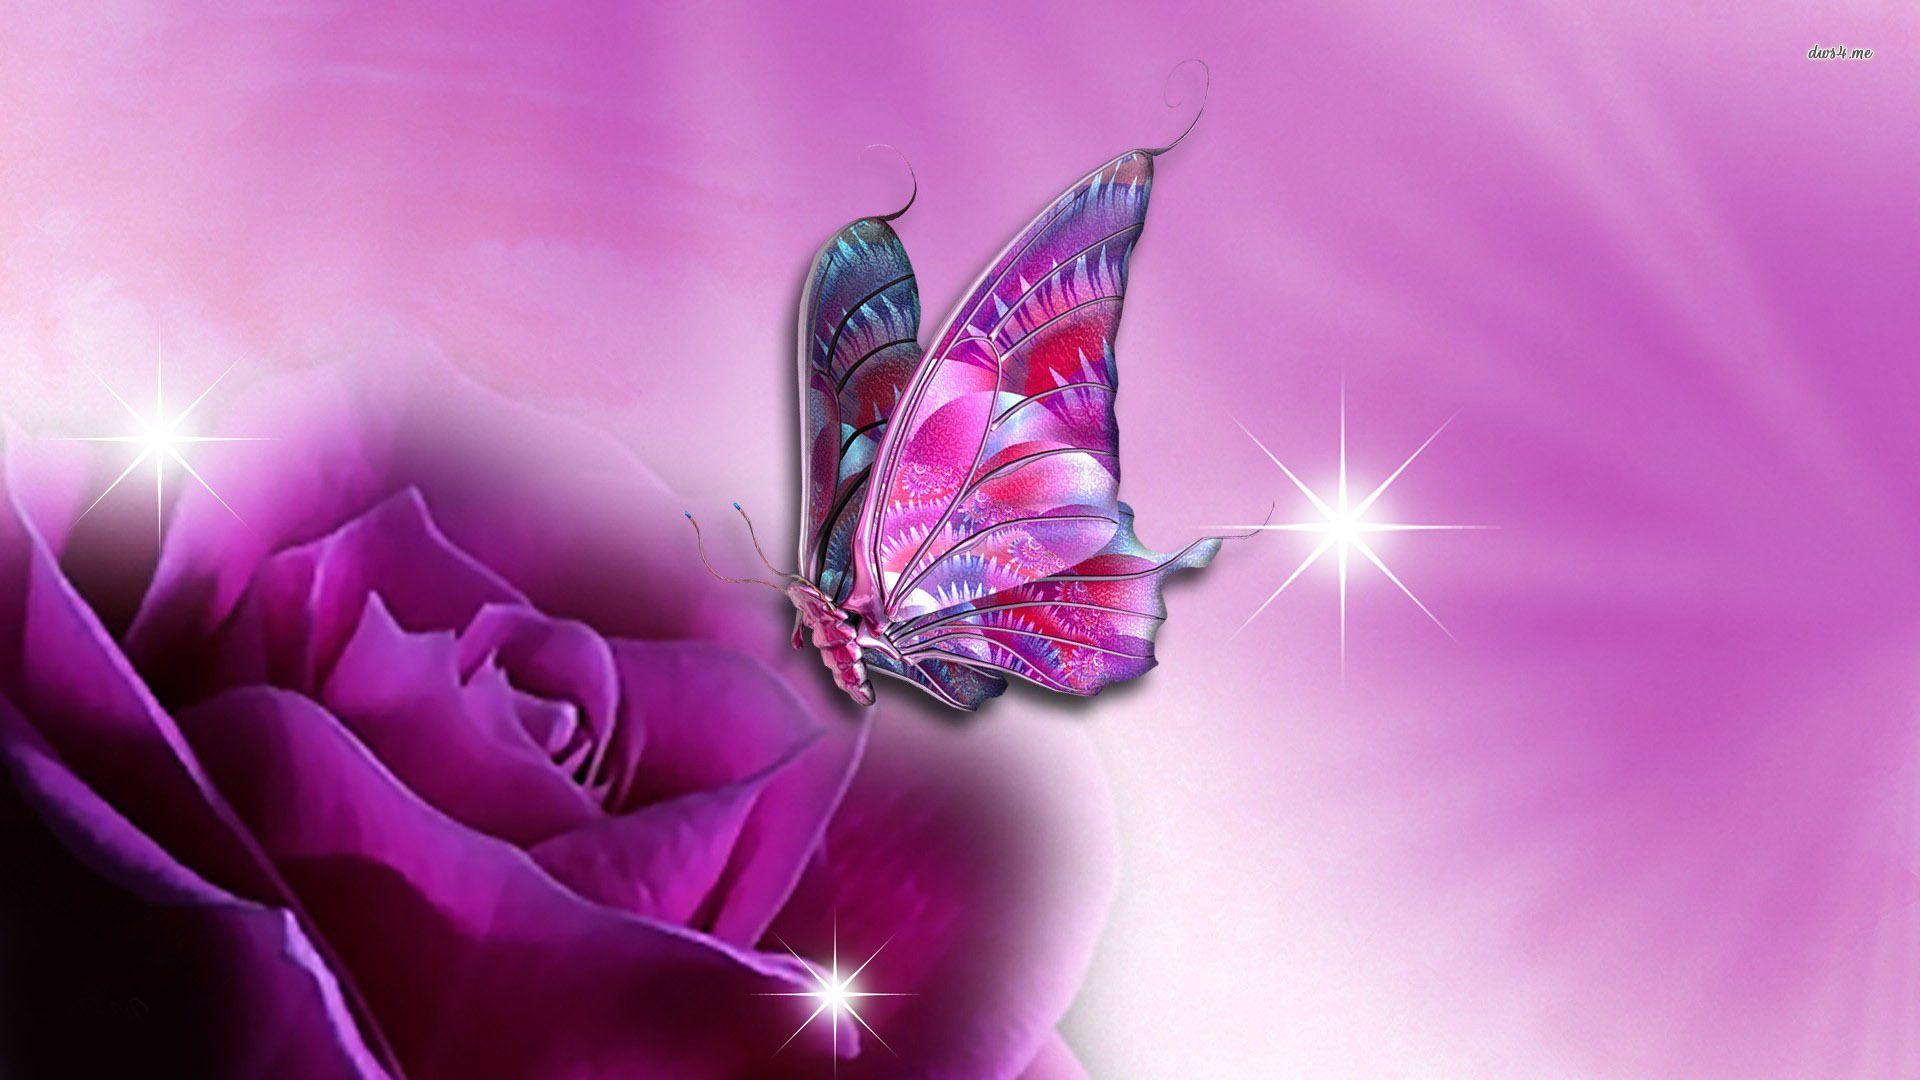 Butterfly on purple rose. Wallpaper vintage background